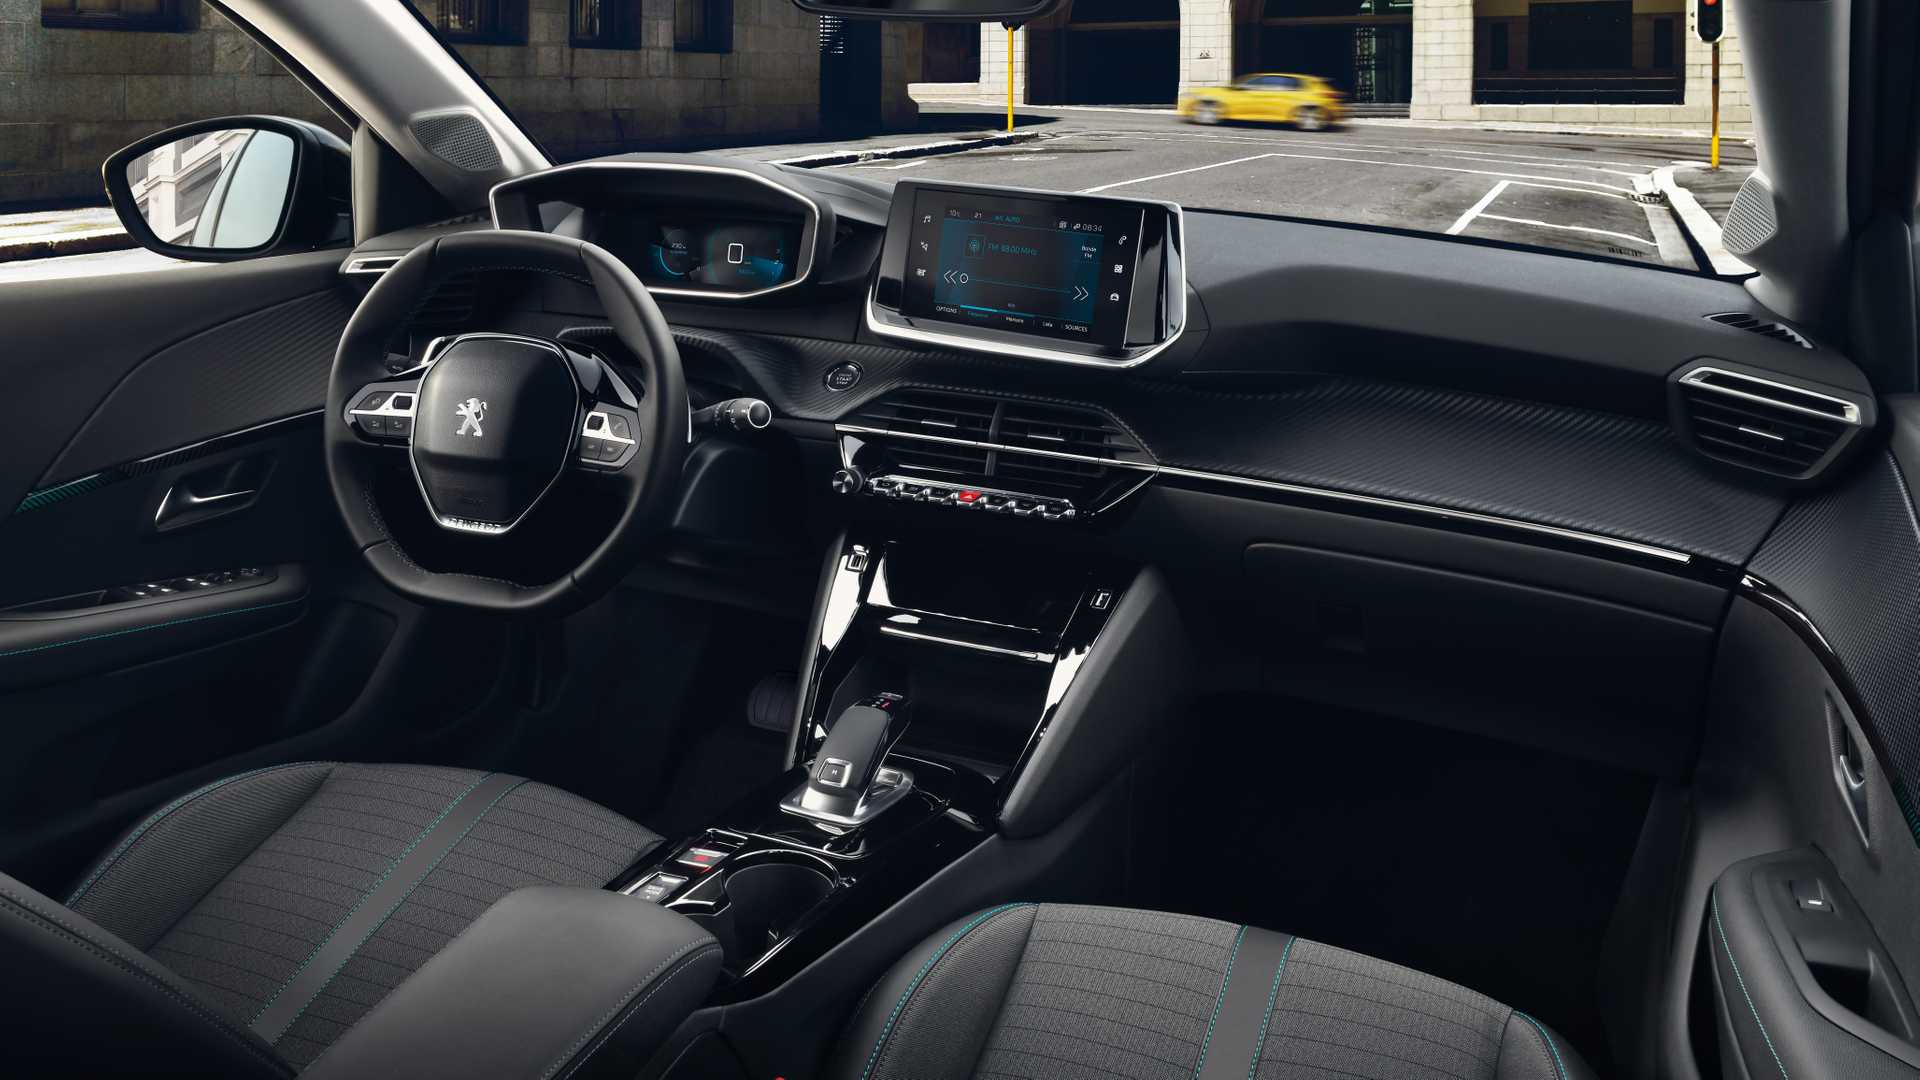 Peugeot 208 interior - Cockpit